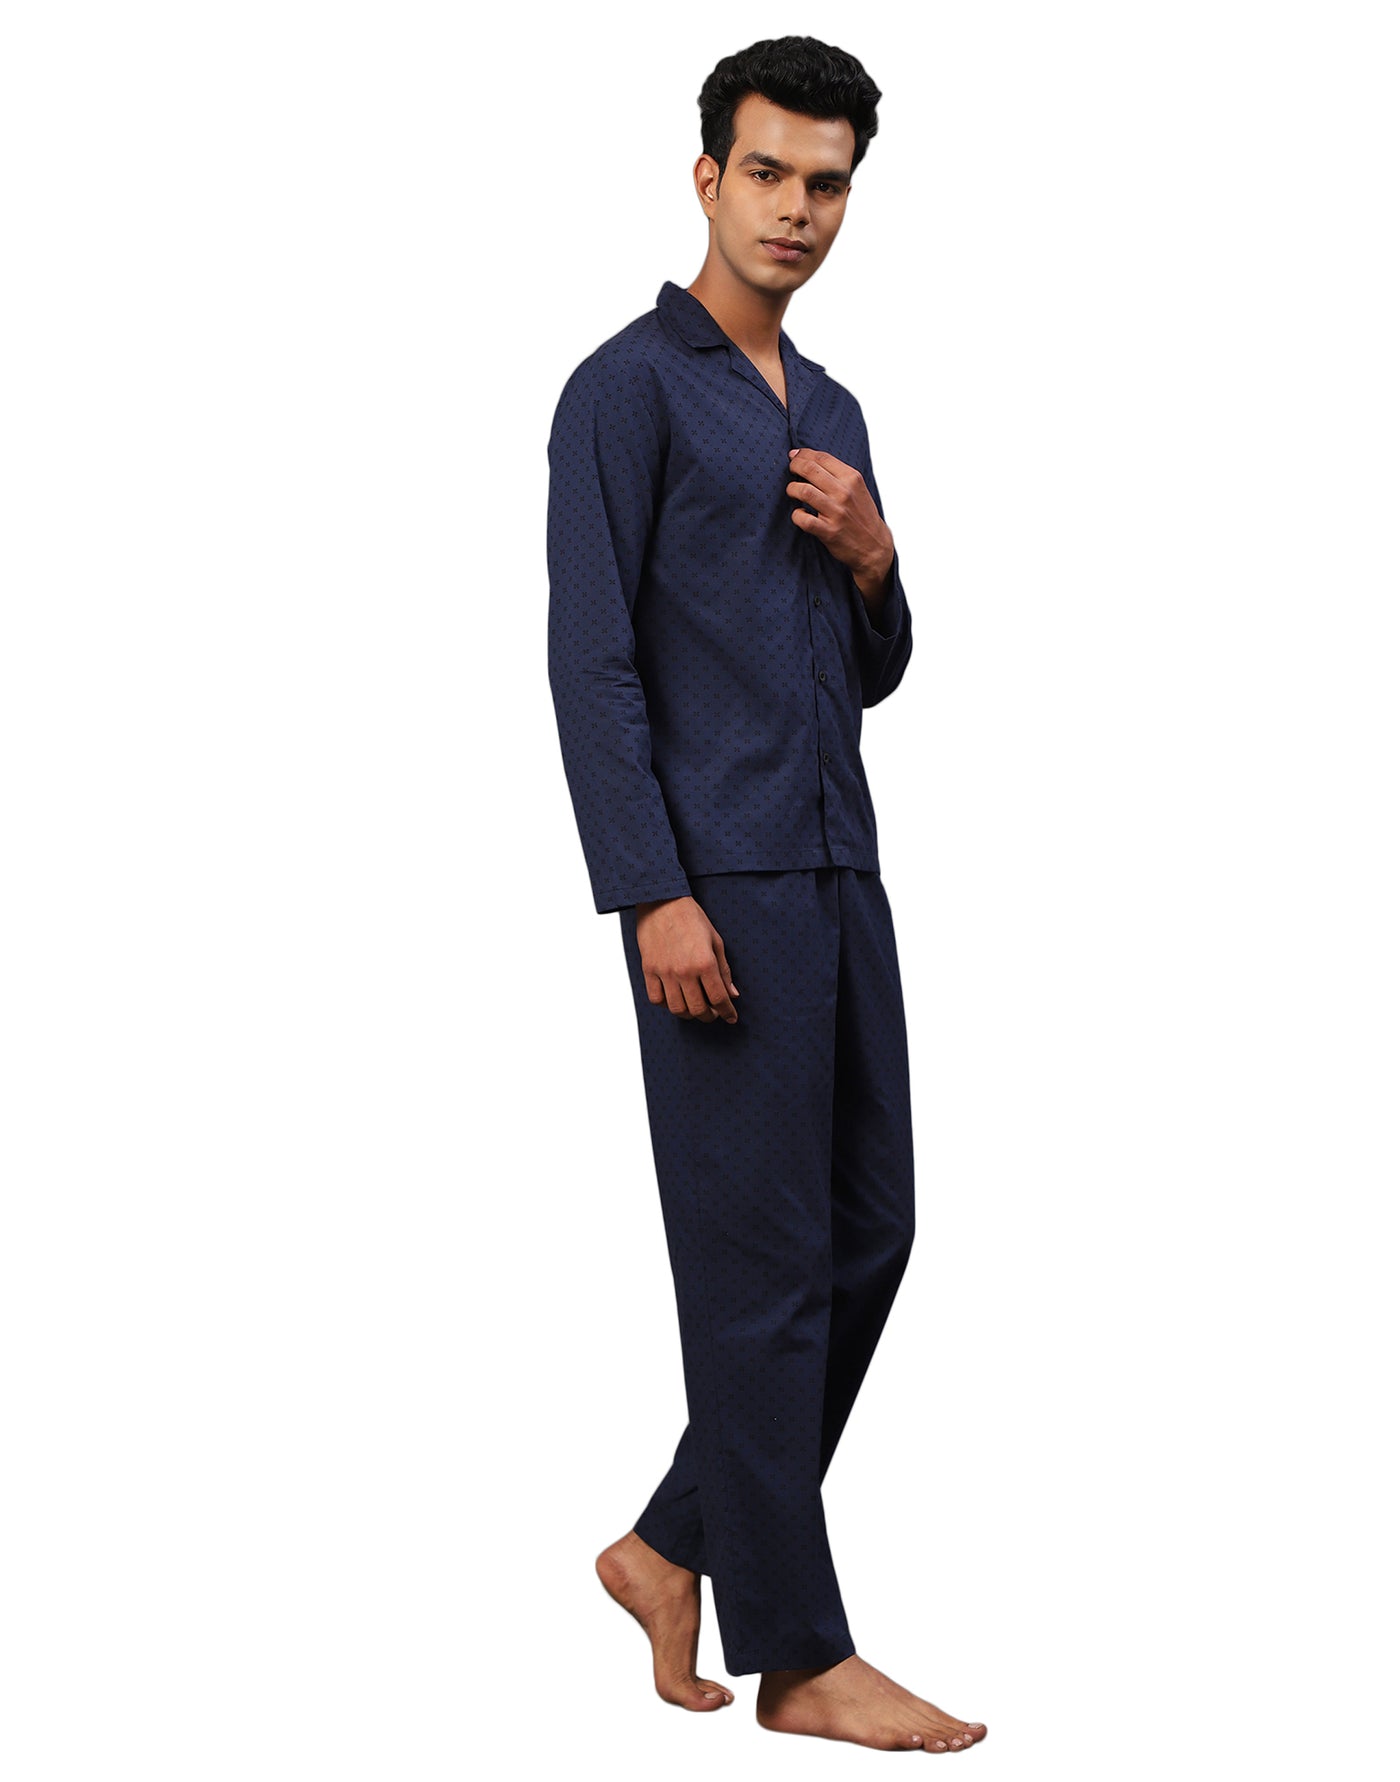 Pyjama Set for Men-Navy Mono Ethic Print